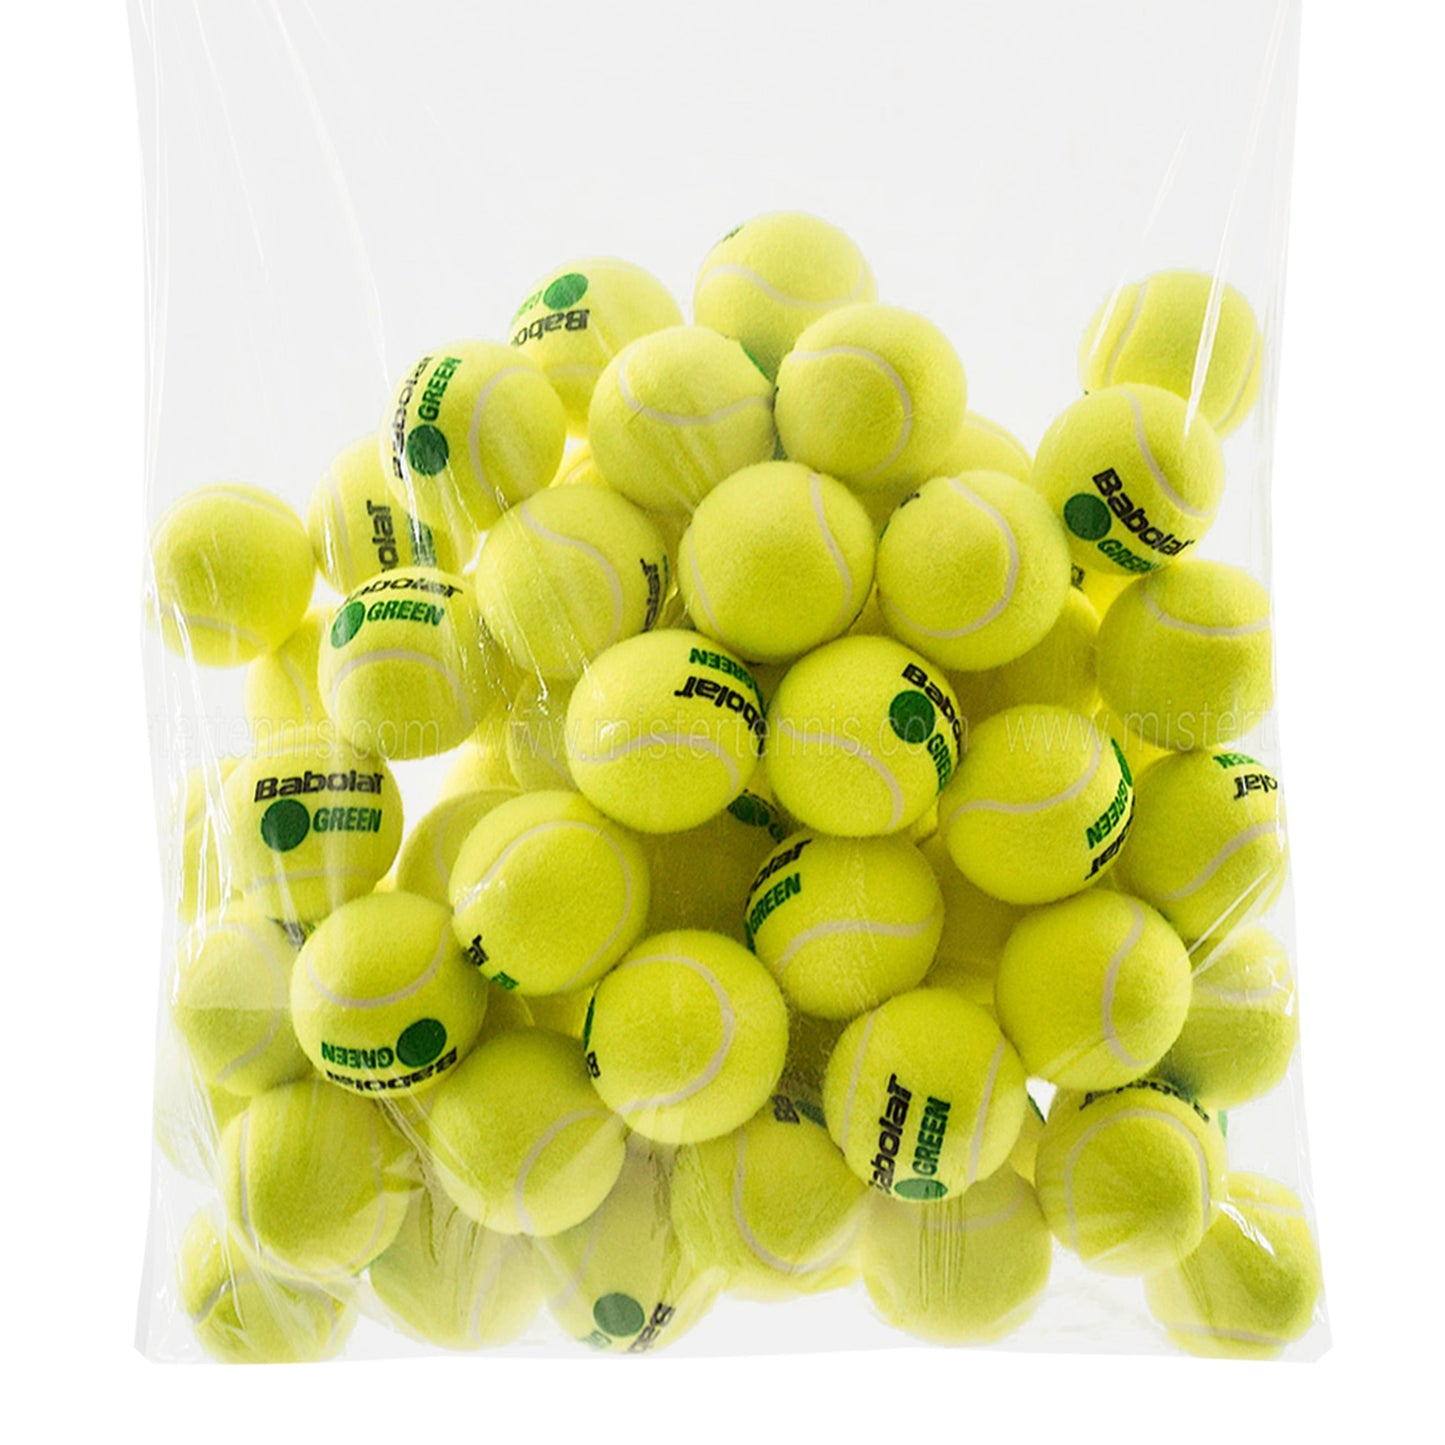 Babolat Green Pressureless Tennis Balls - Bag/72